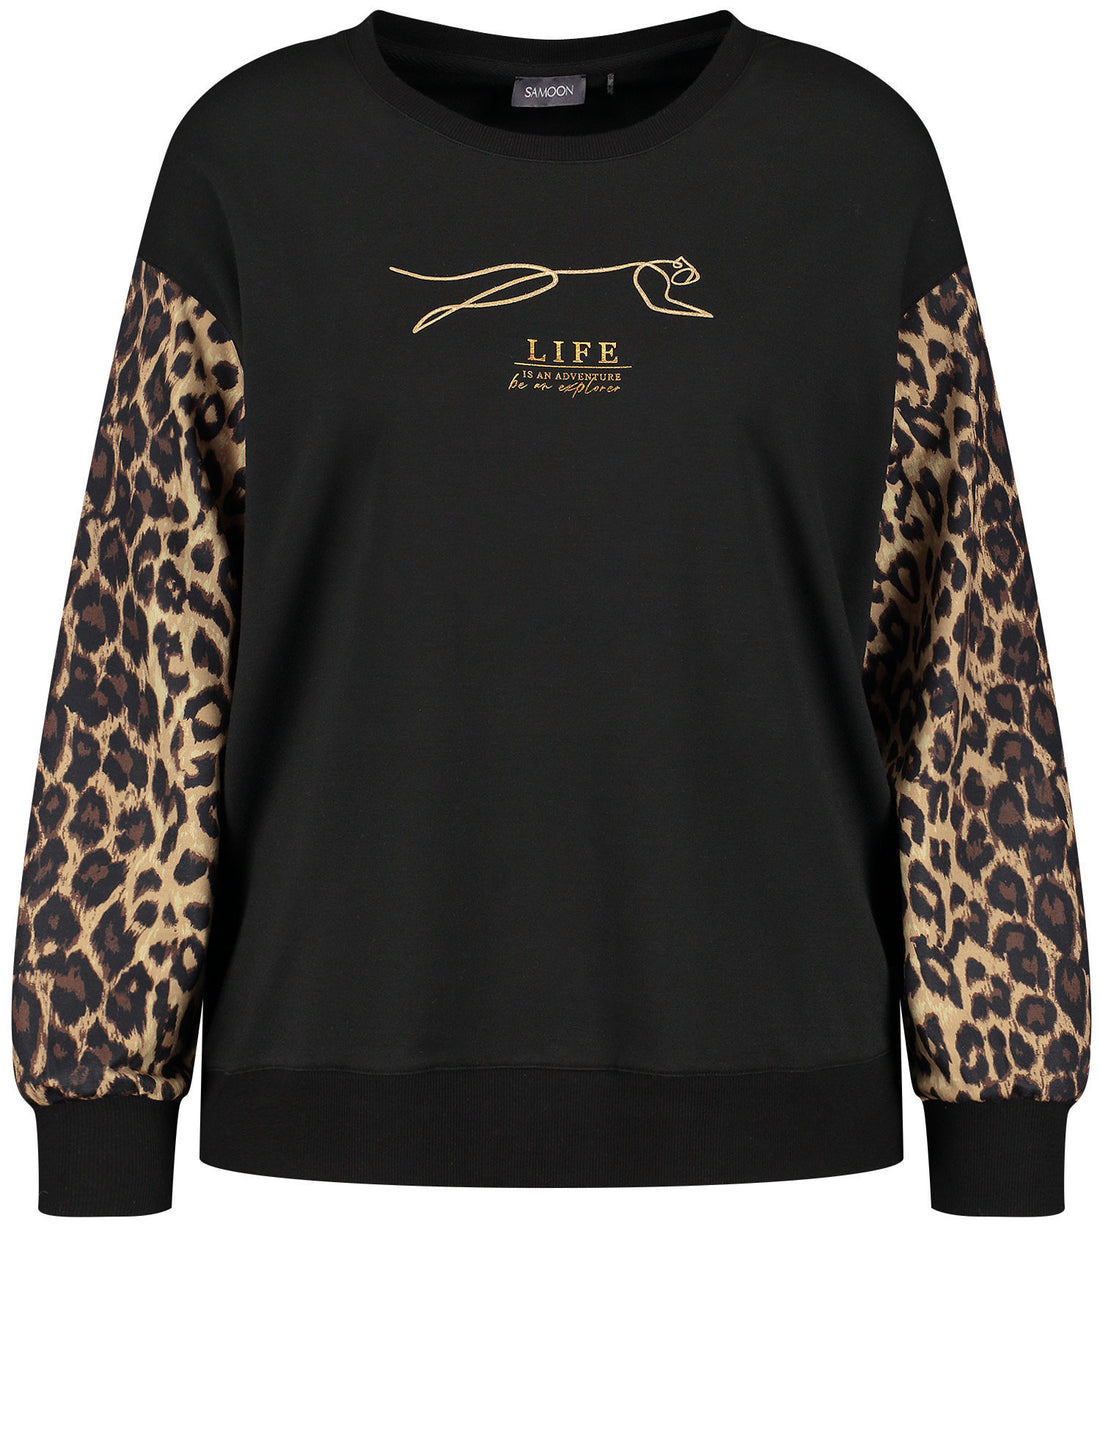 Sweatshirt With Leopard Print Details_371202-26309_1102_01